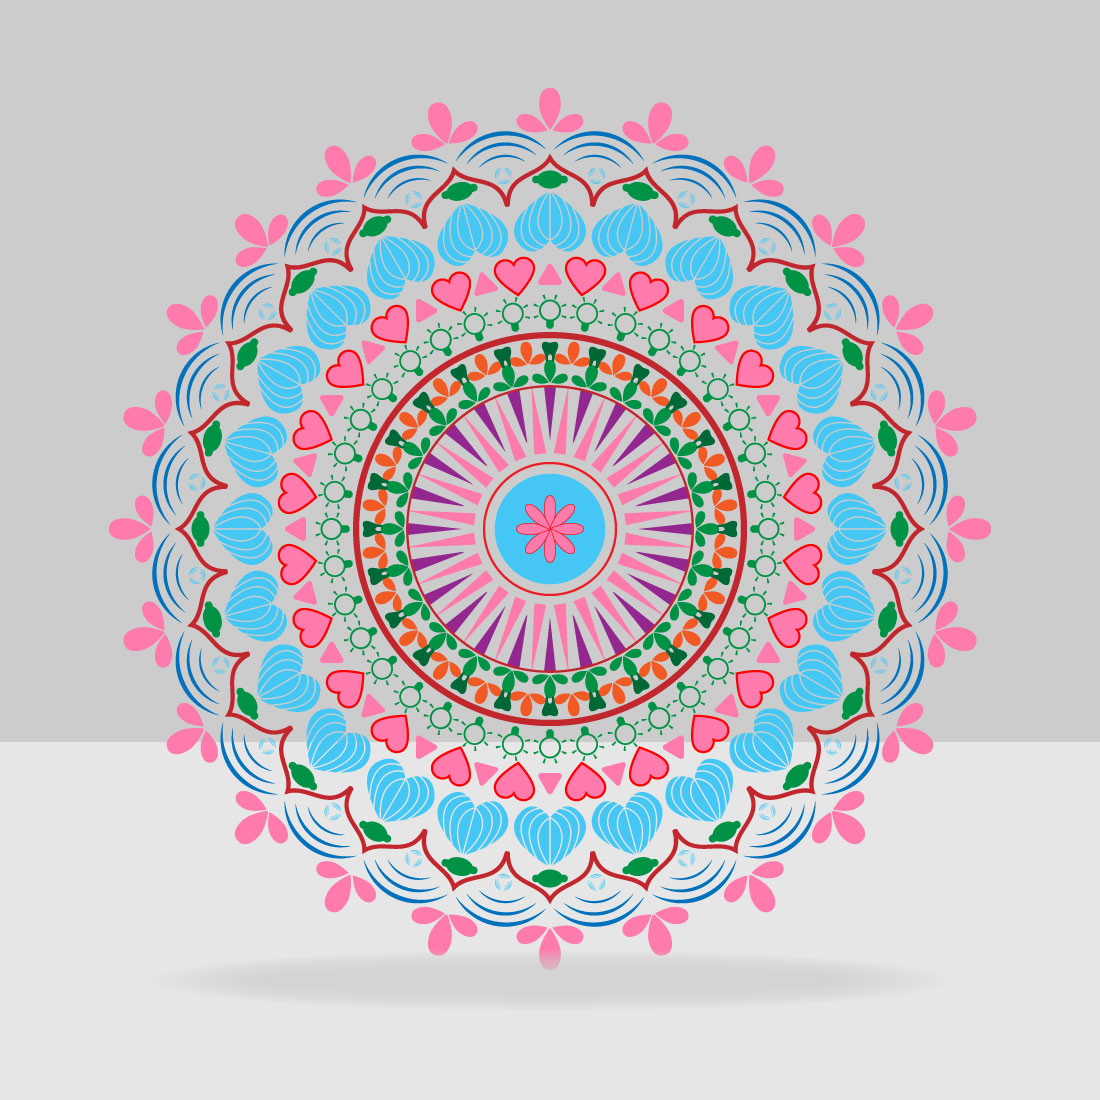 Floral Mandala Design cover image.